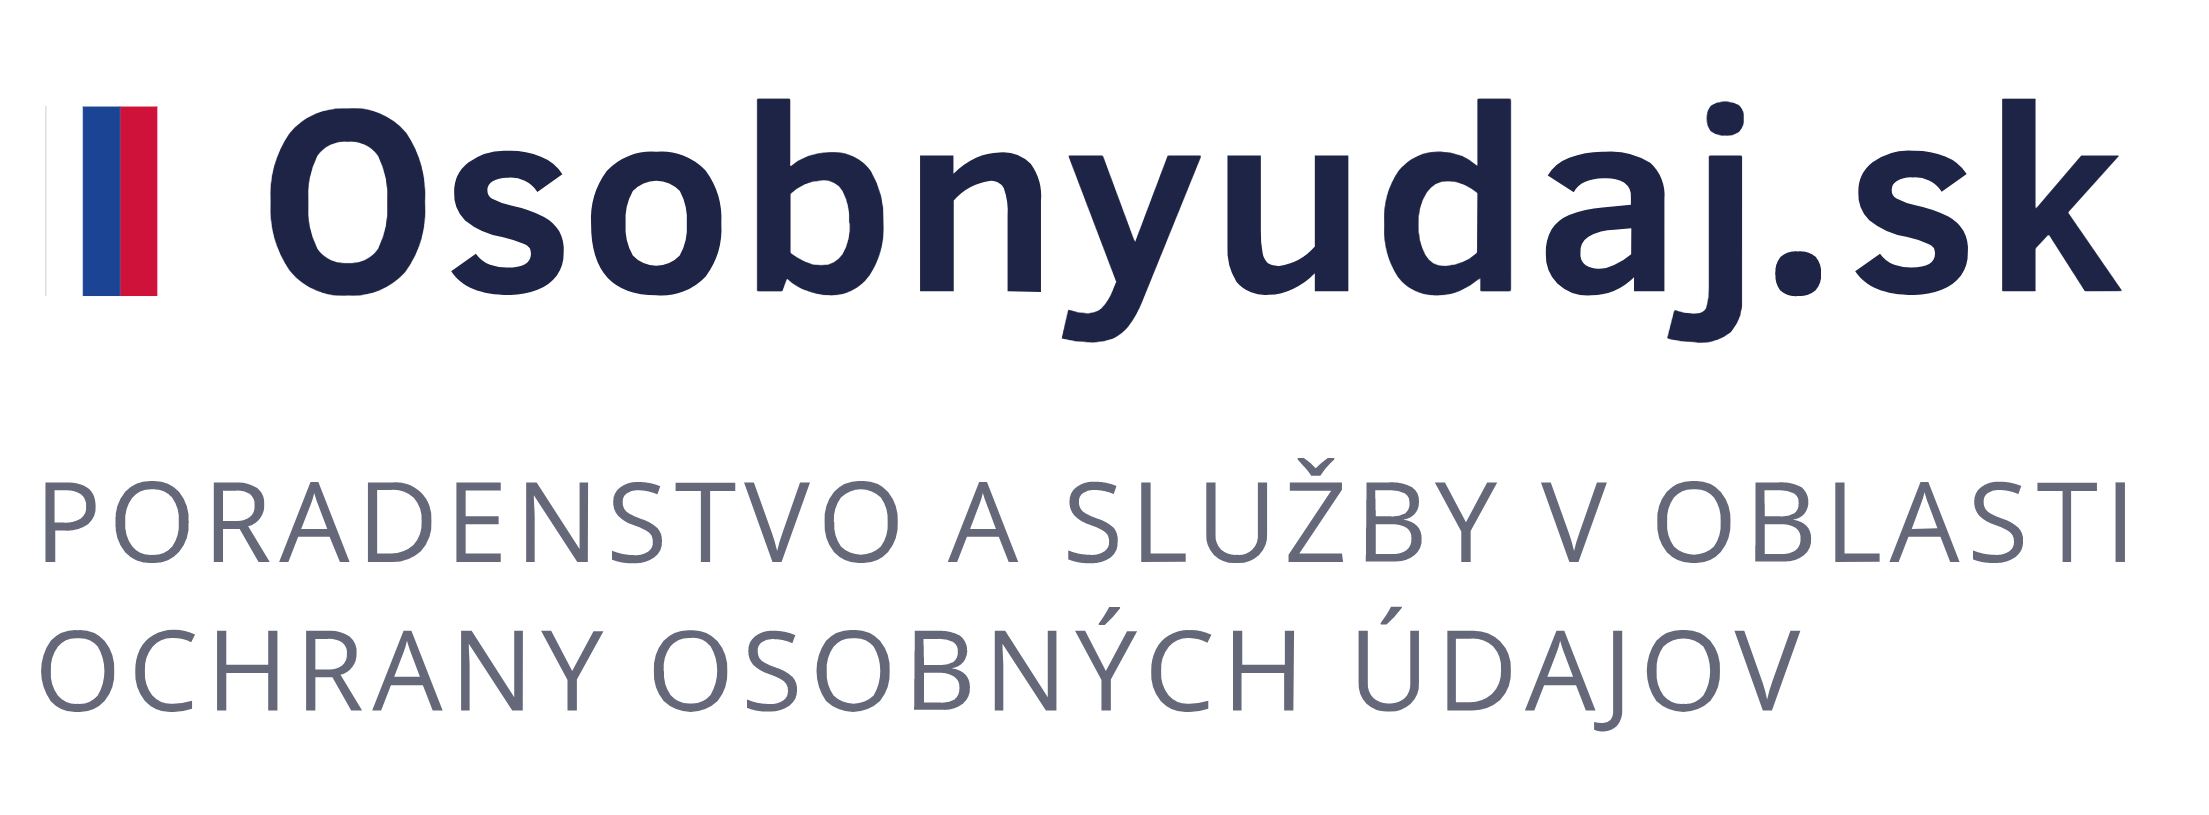 Logo Osobnyudaj.sk